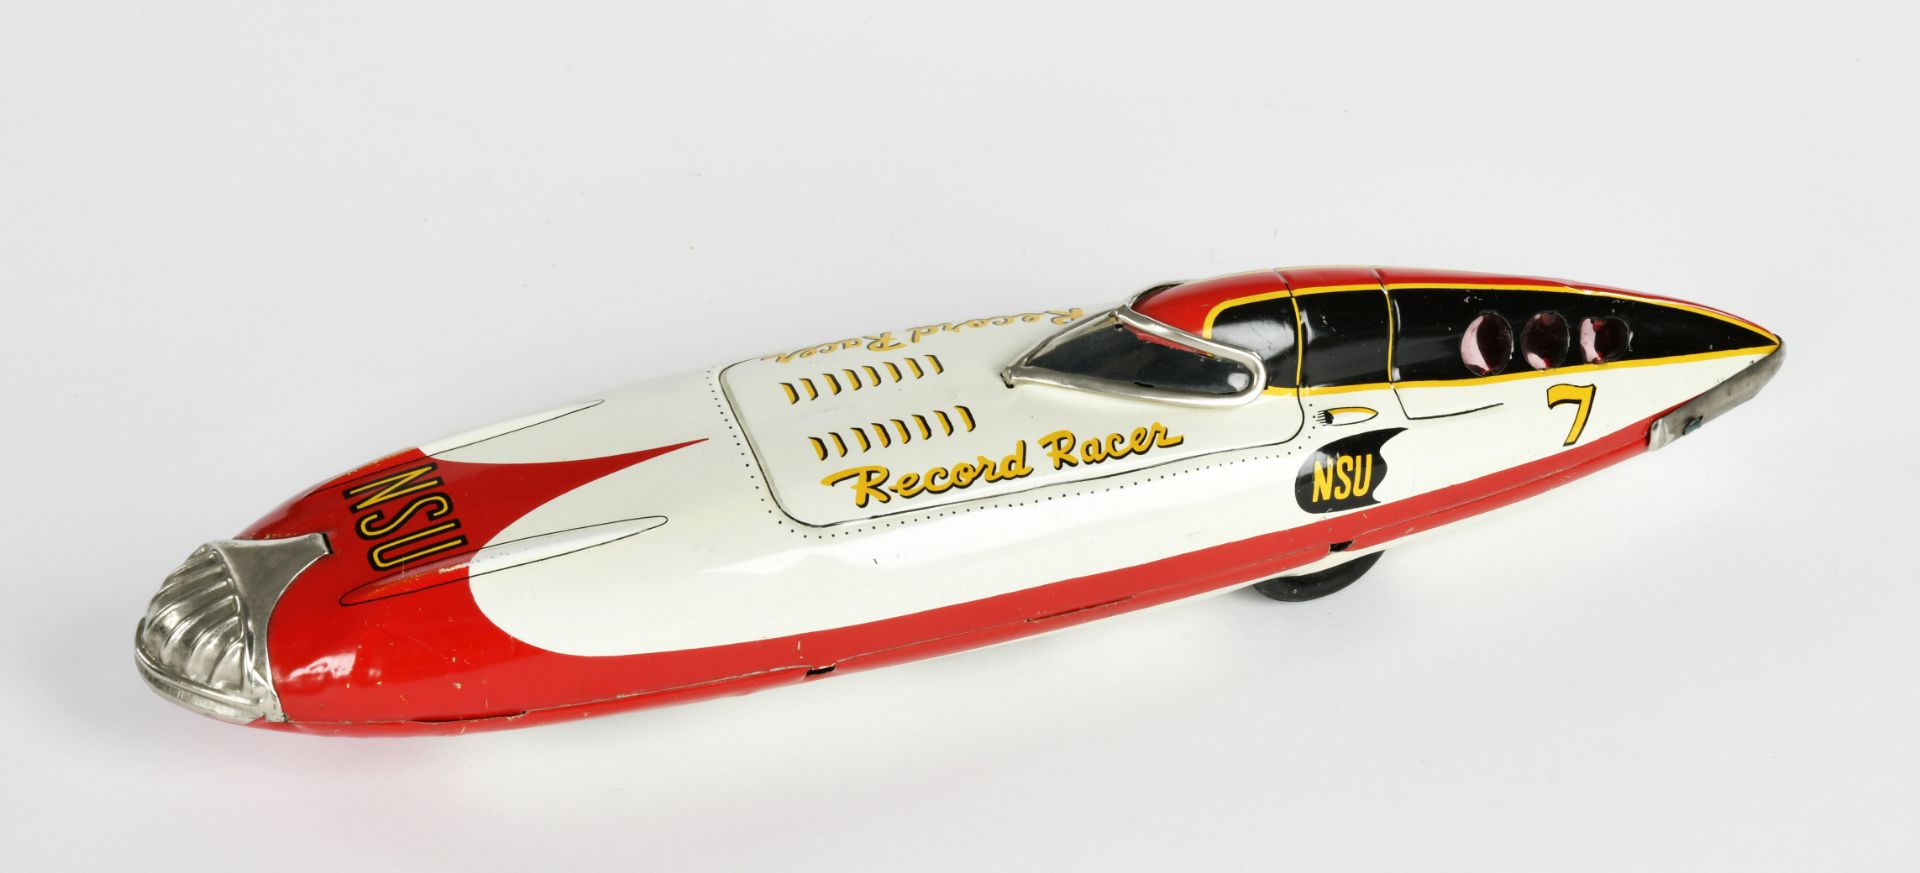 Bandai, NSU Record Racer, Japan, 33 cm, tin, friction ok, min. paint d., C 2+ - Image 2 of 3